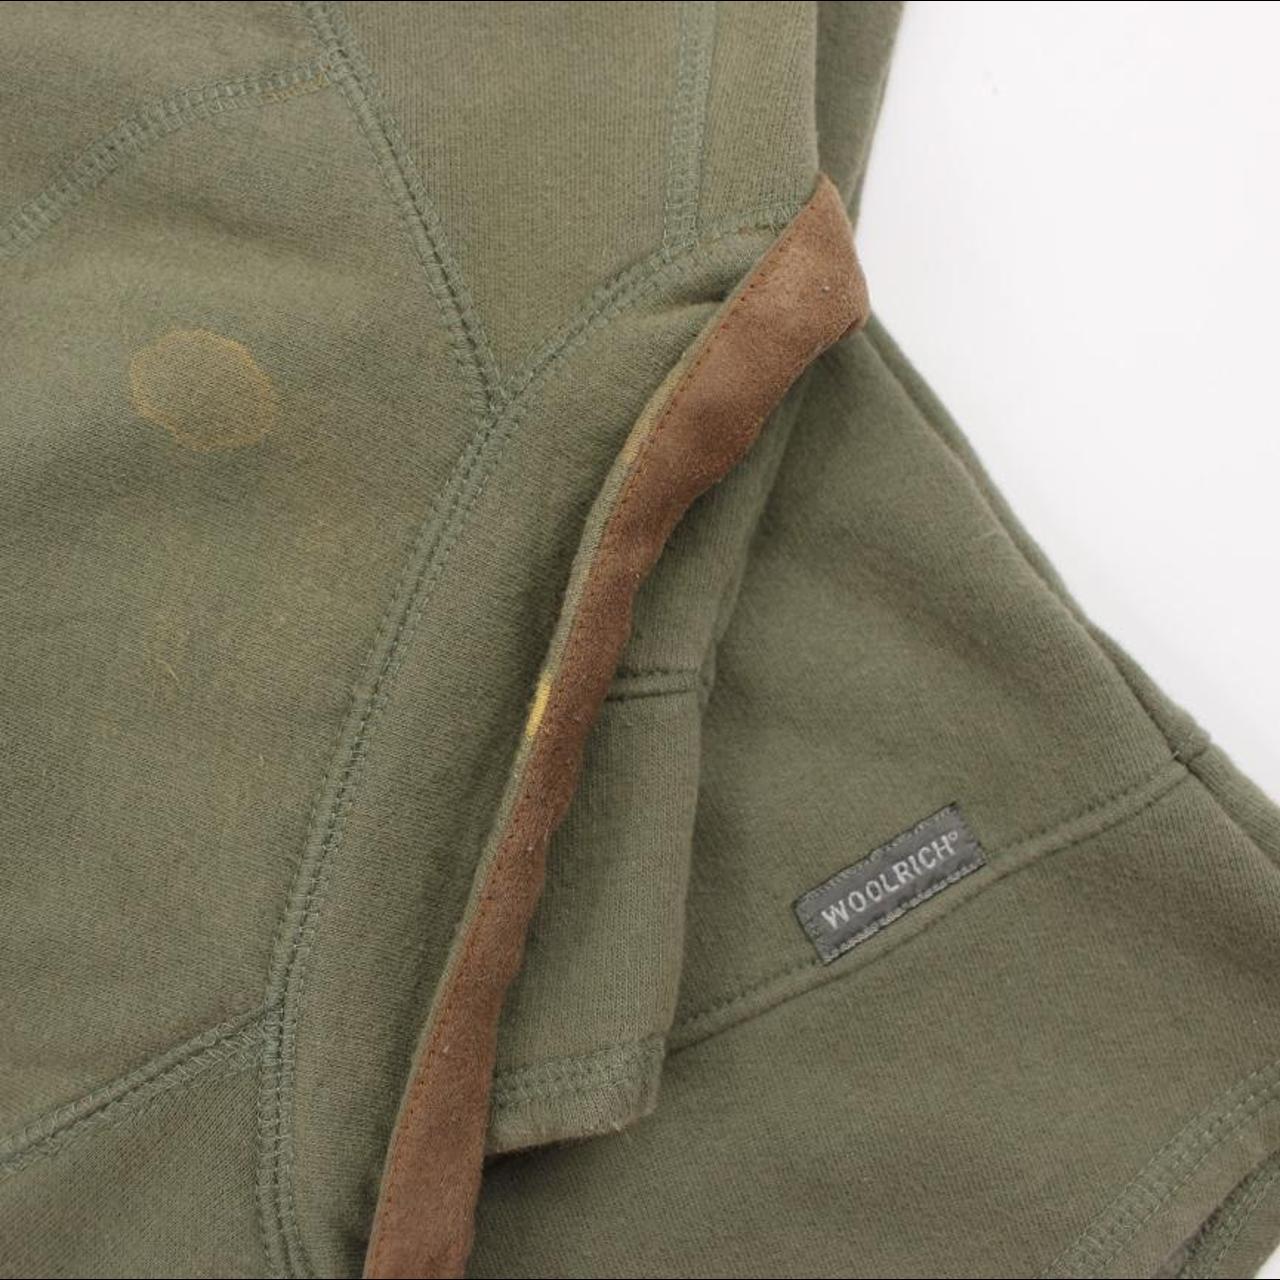 Product Image 3 - Woolrich quarter zip sweatshirt 🔥

The